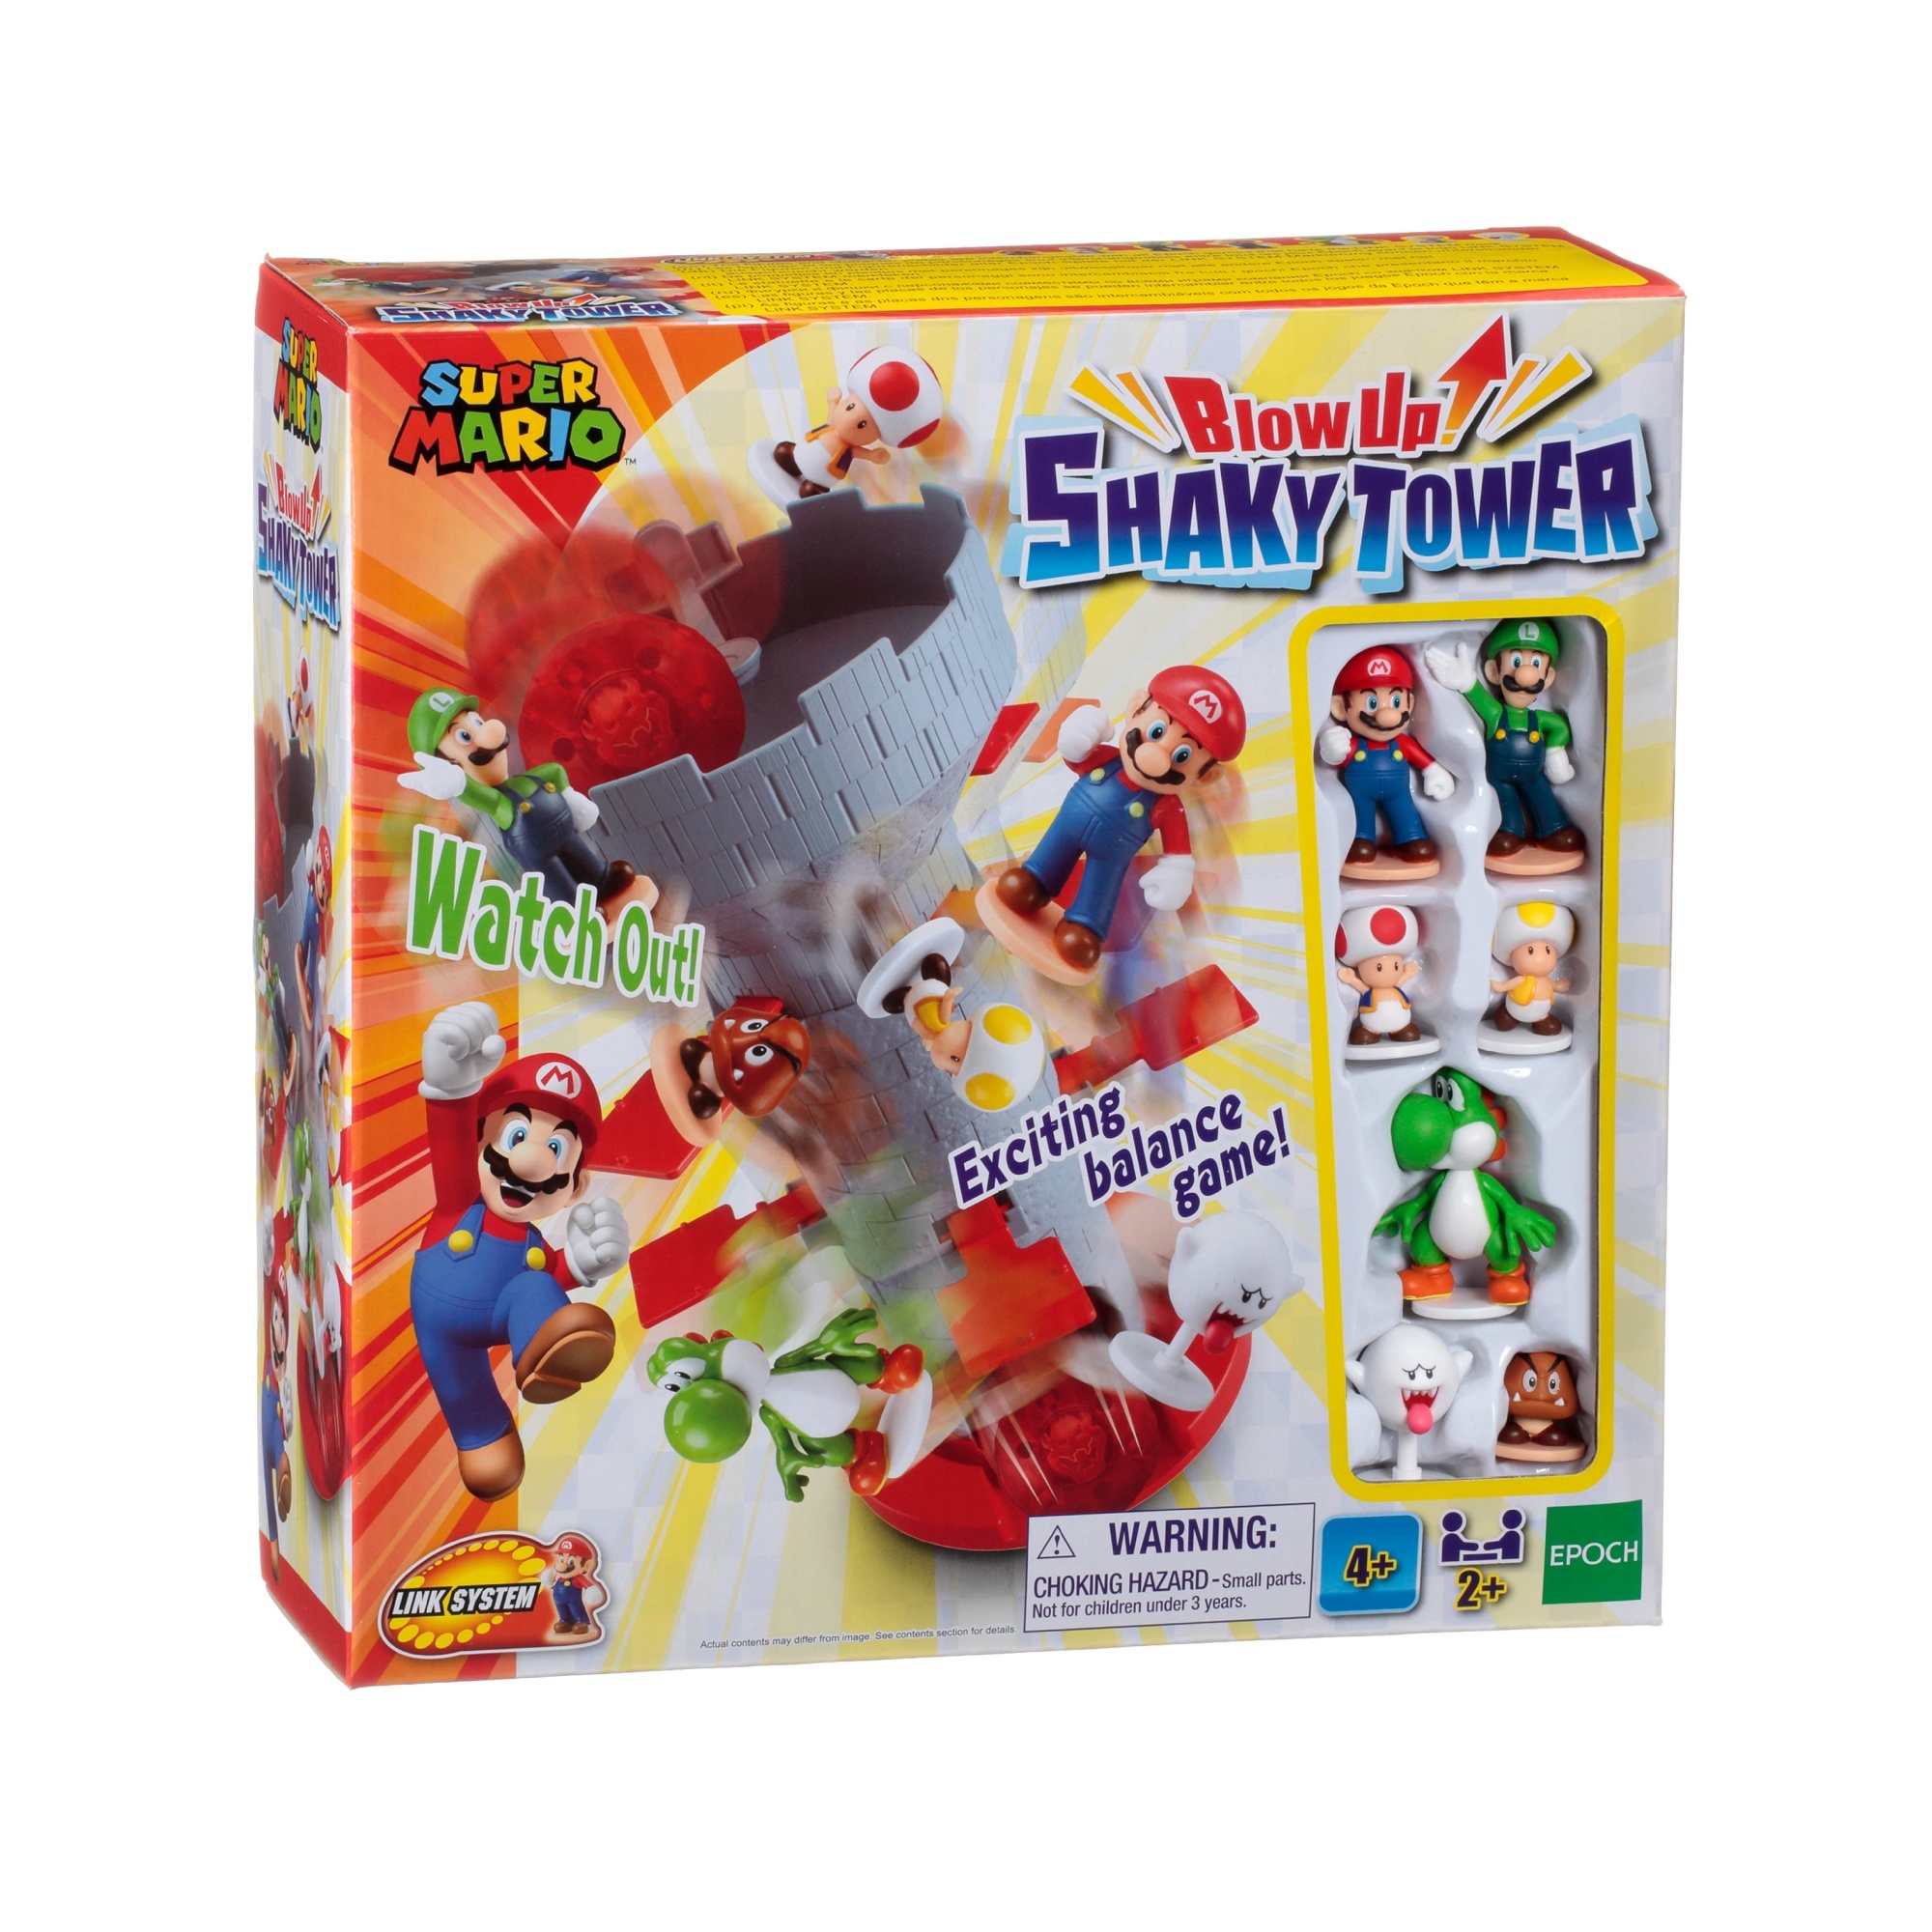 Super Mario Nintendo Super Mario Blow Up! Shaky tower